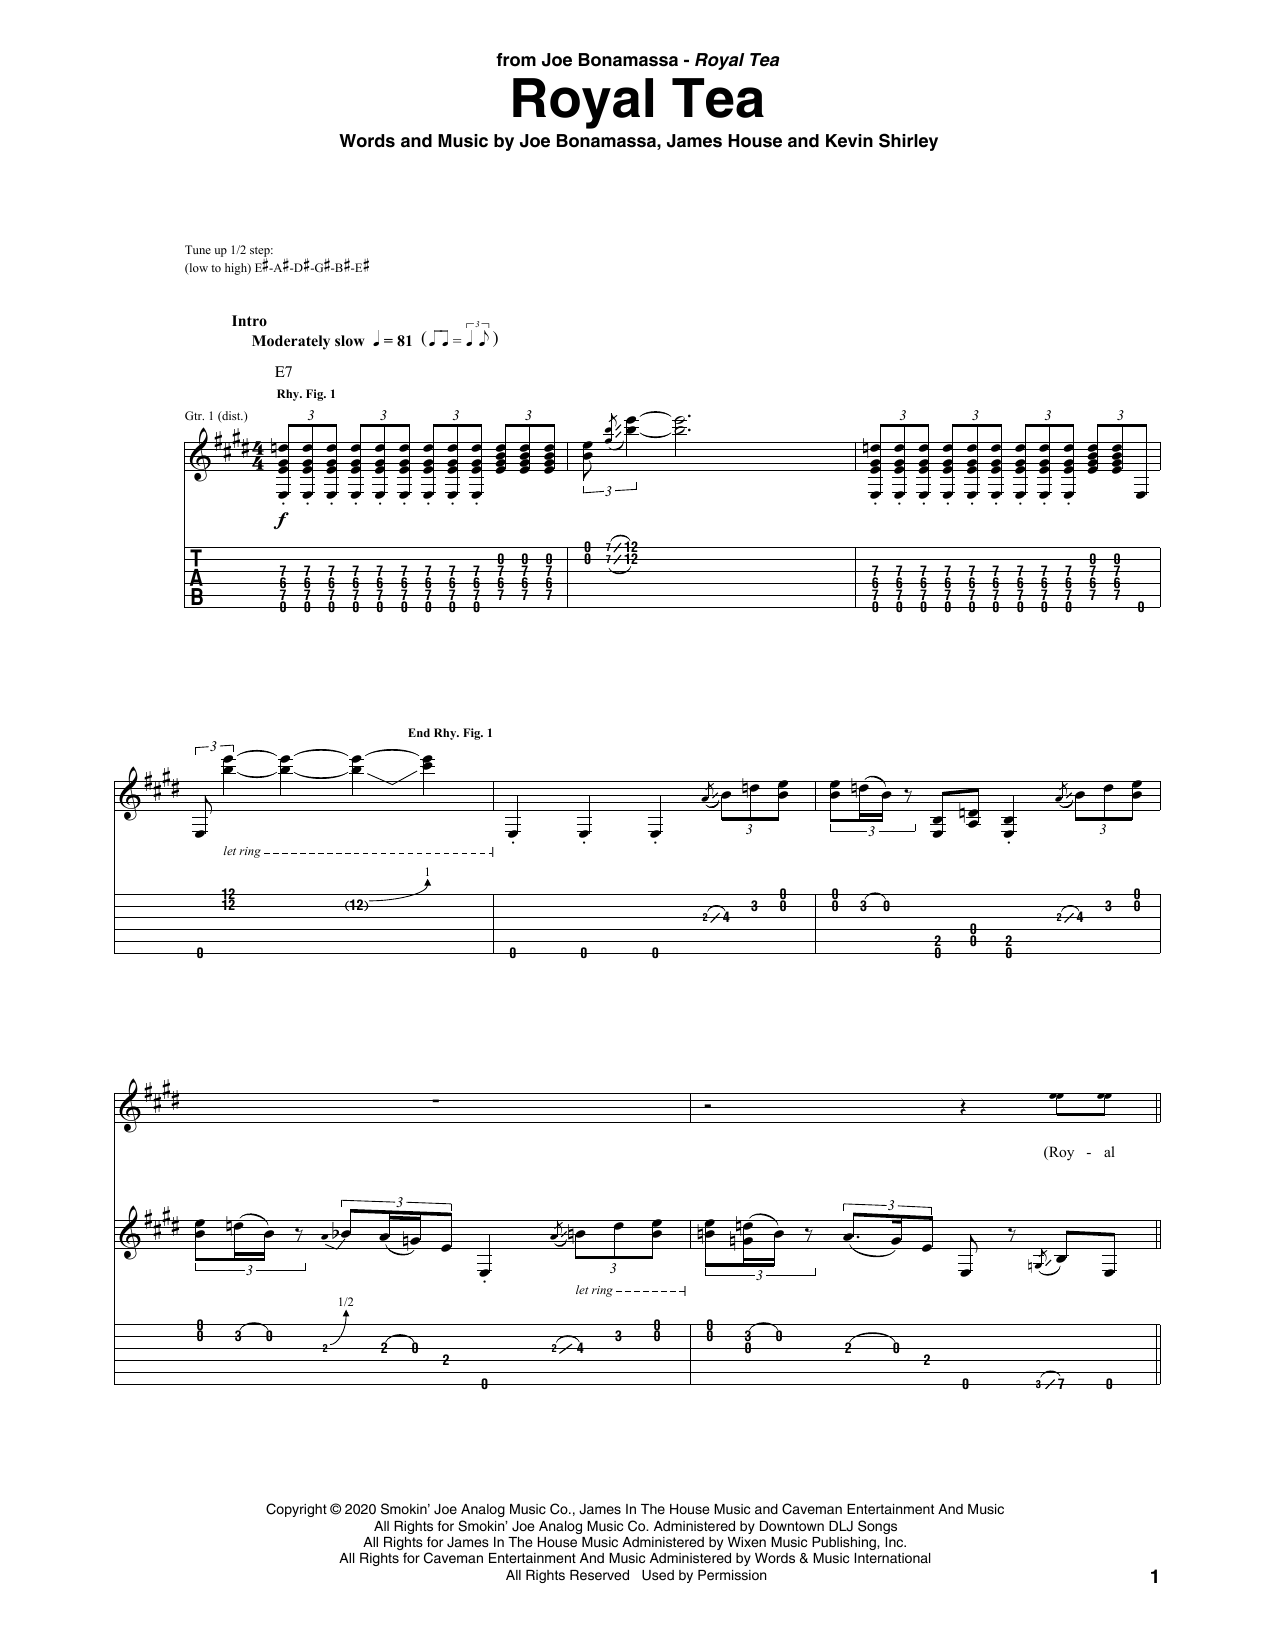 Joe Bonamassa Royal Tea Sheet Music Notes & Chords for Guitar Tab - Download or Print PDF